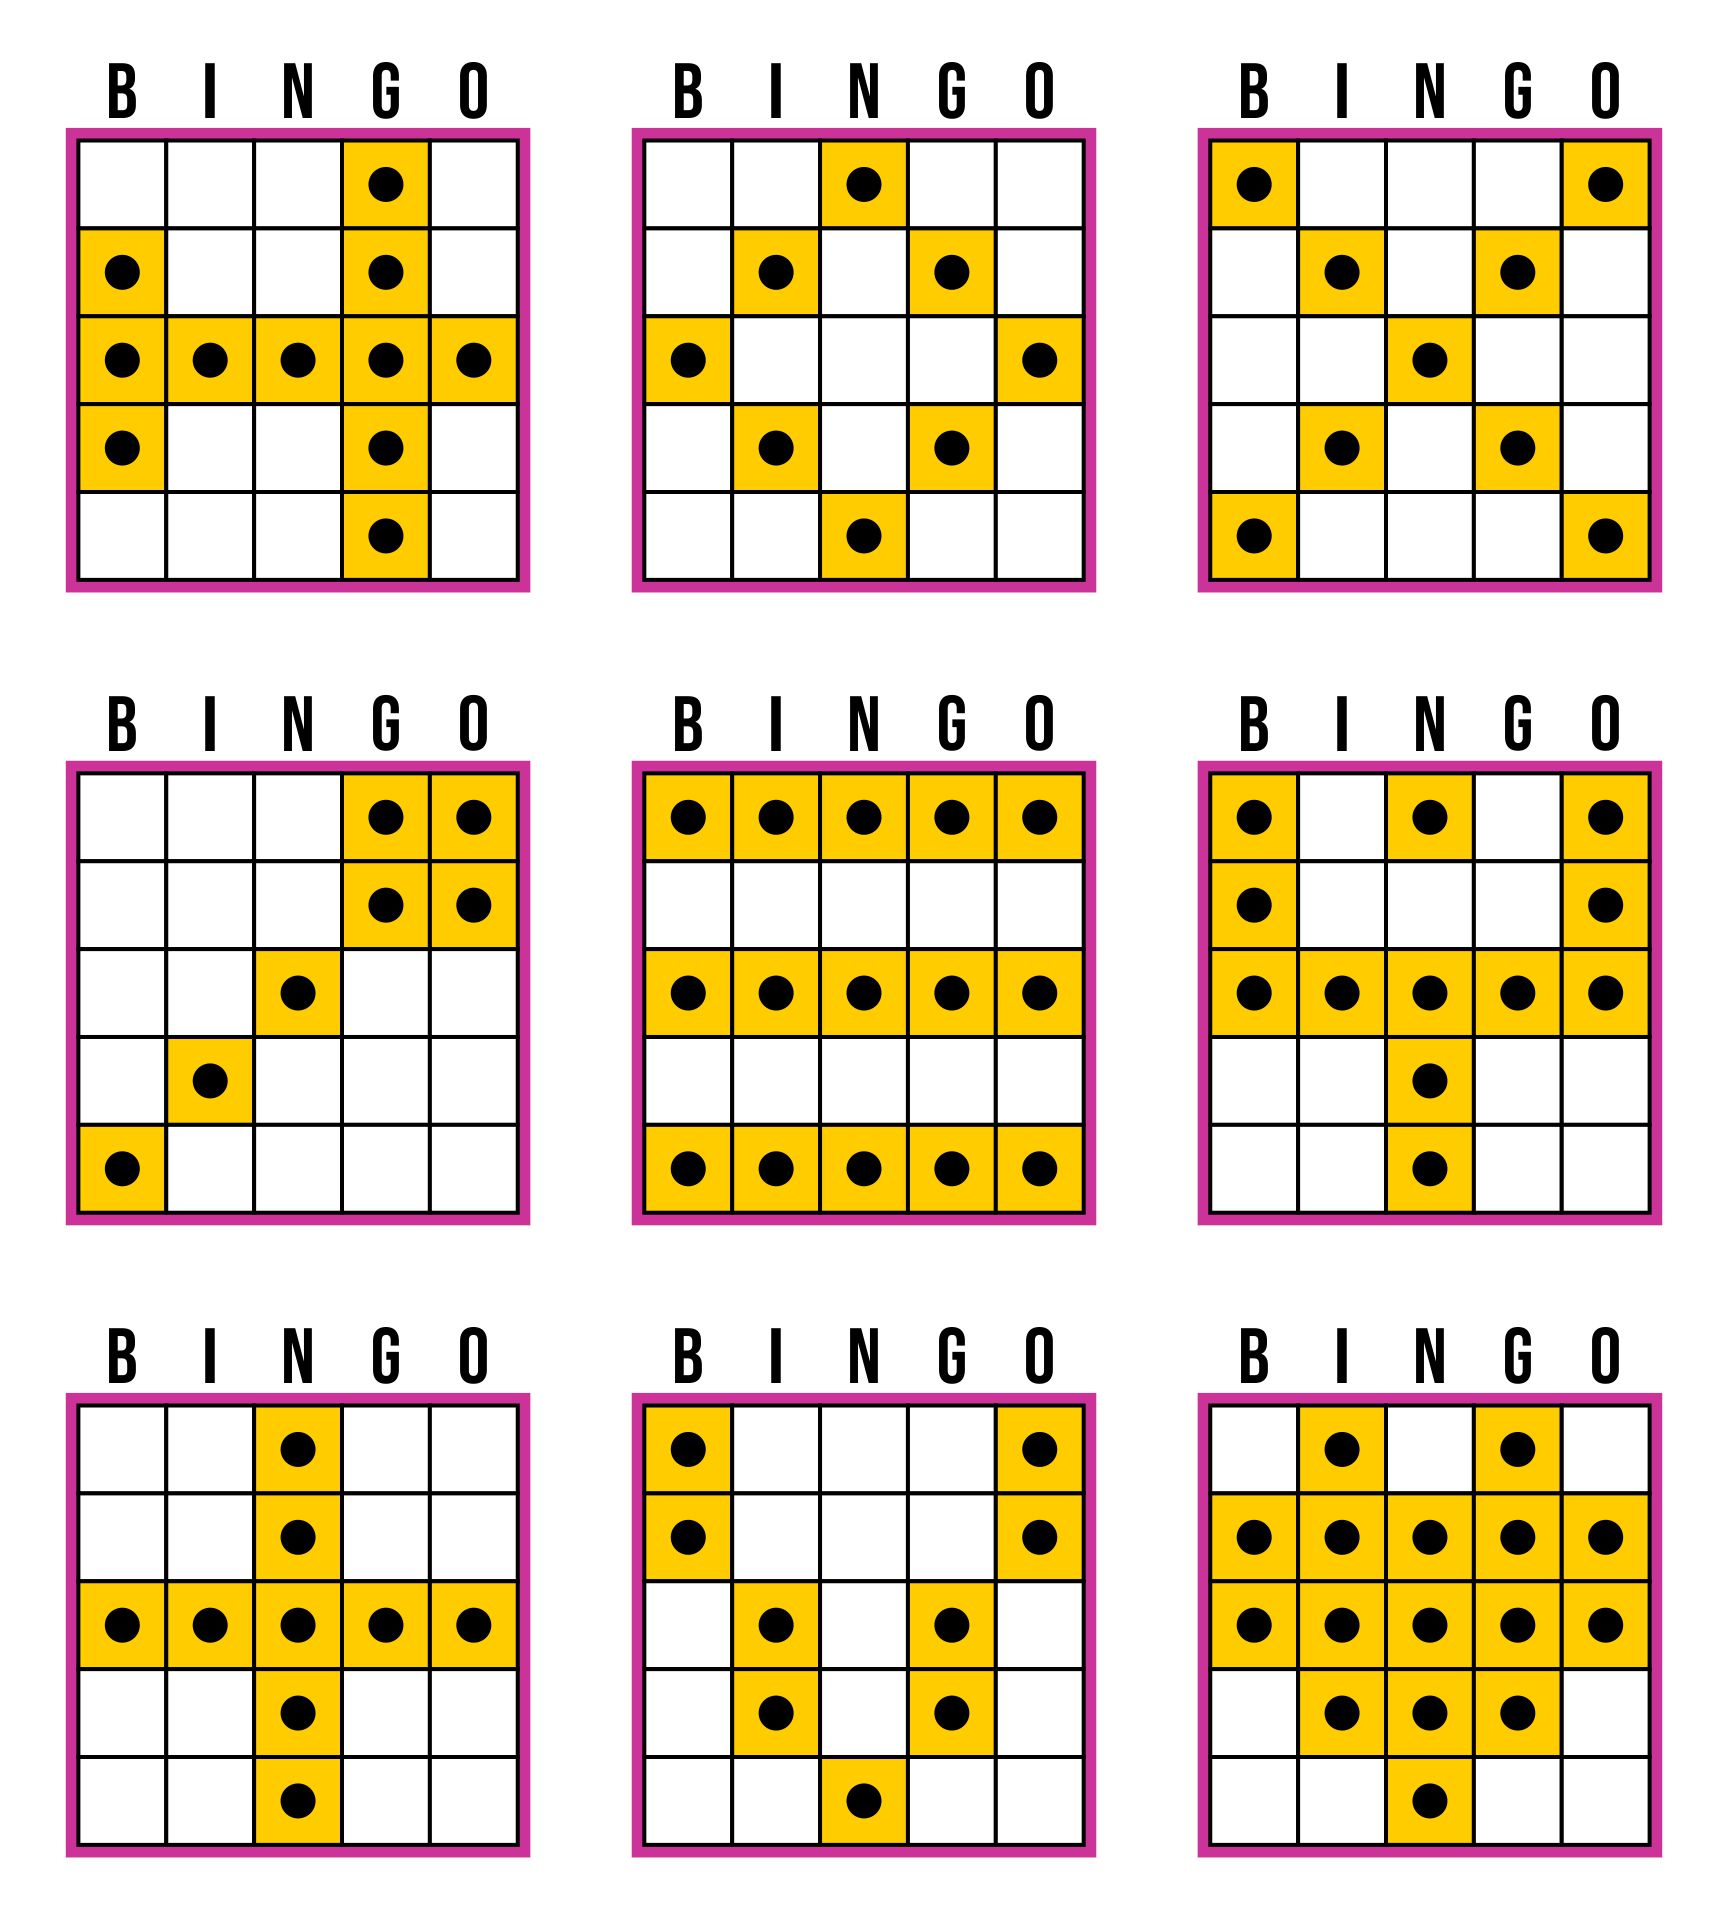 bingo-games-patterns-bingo-patterns-bingo-cards-to-print-bingo-games